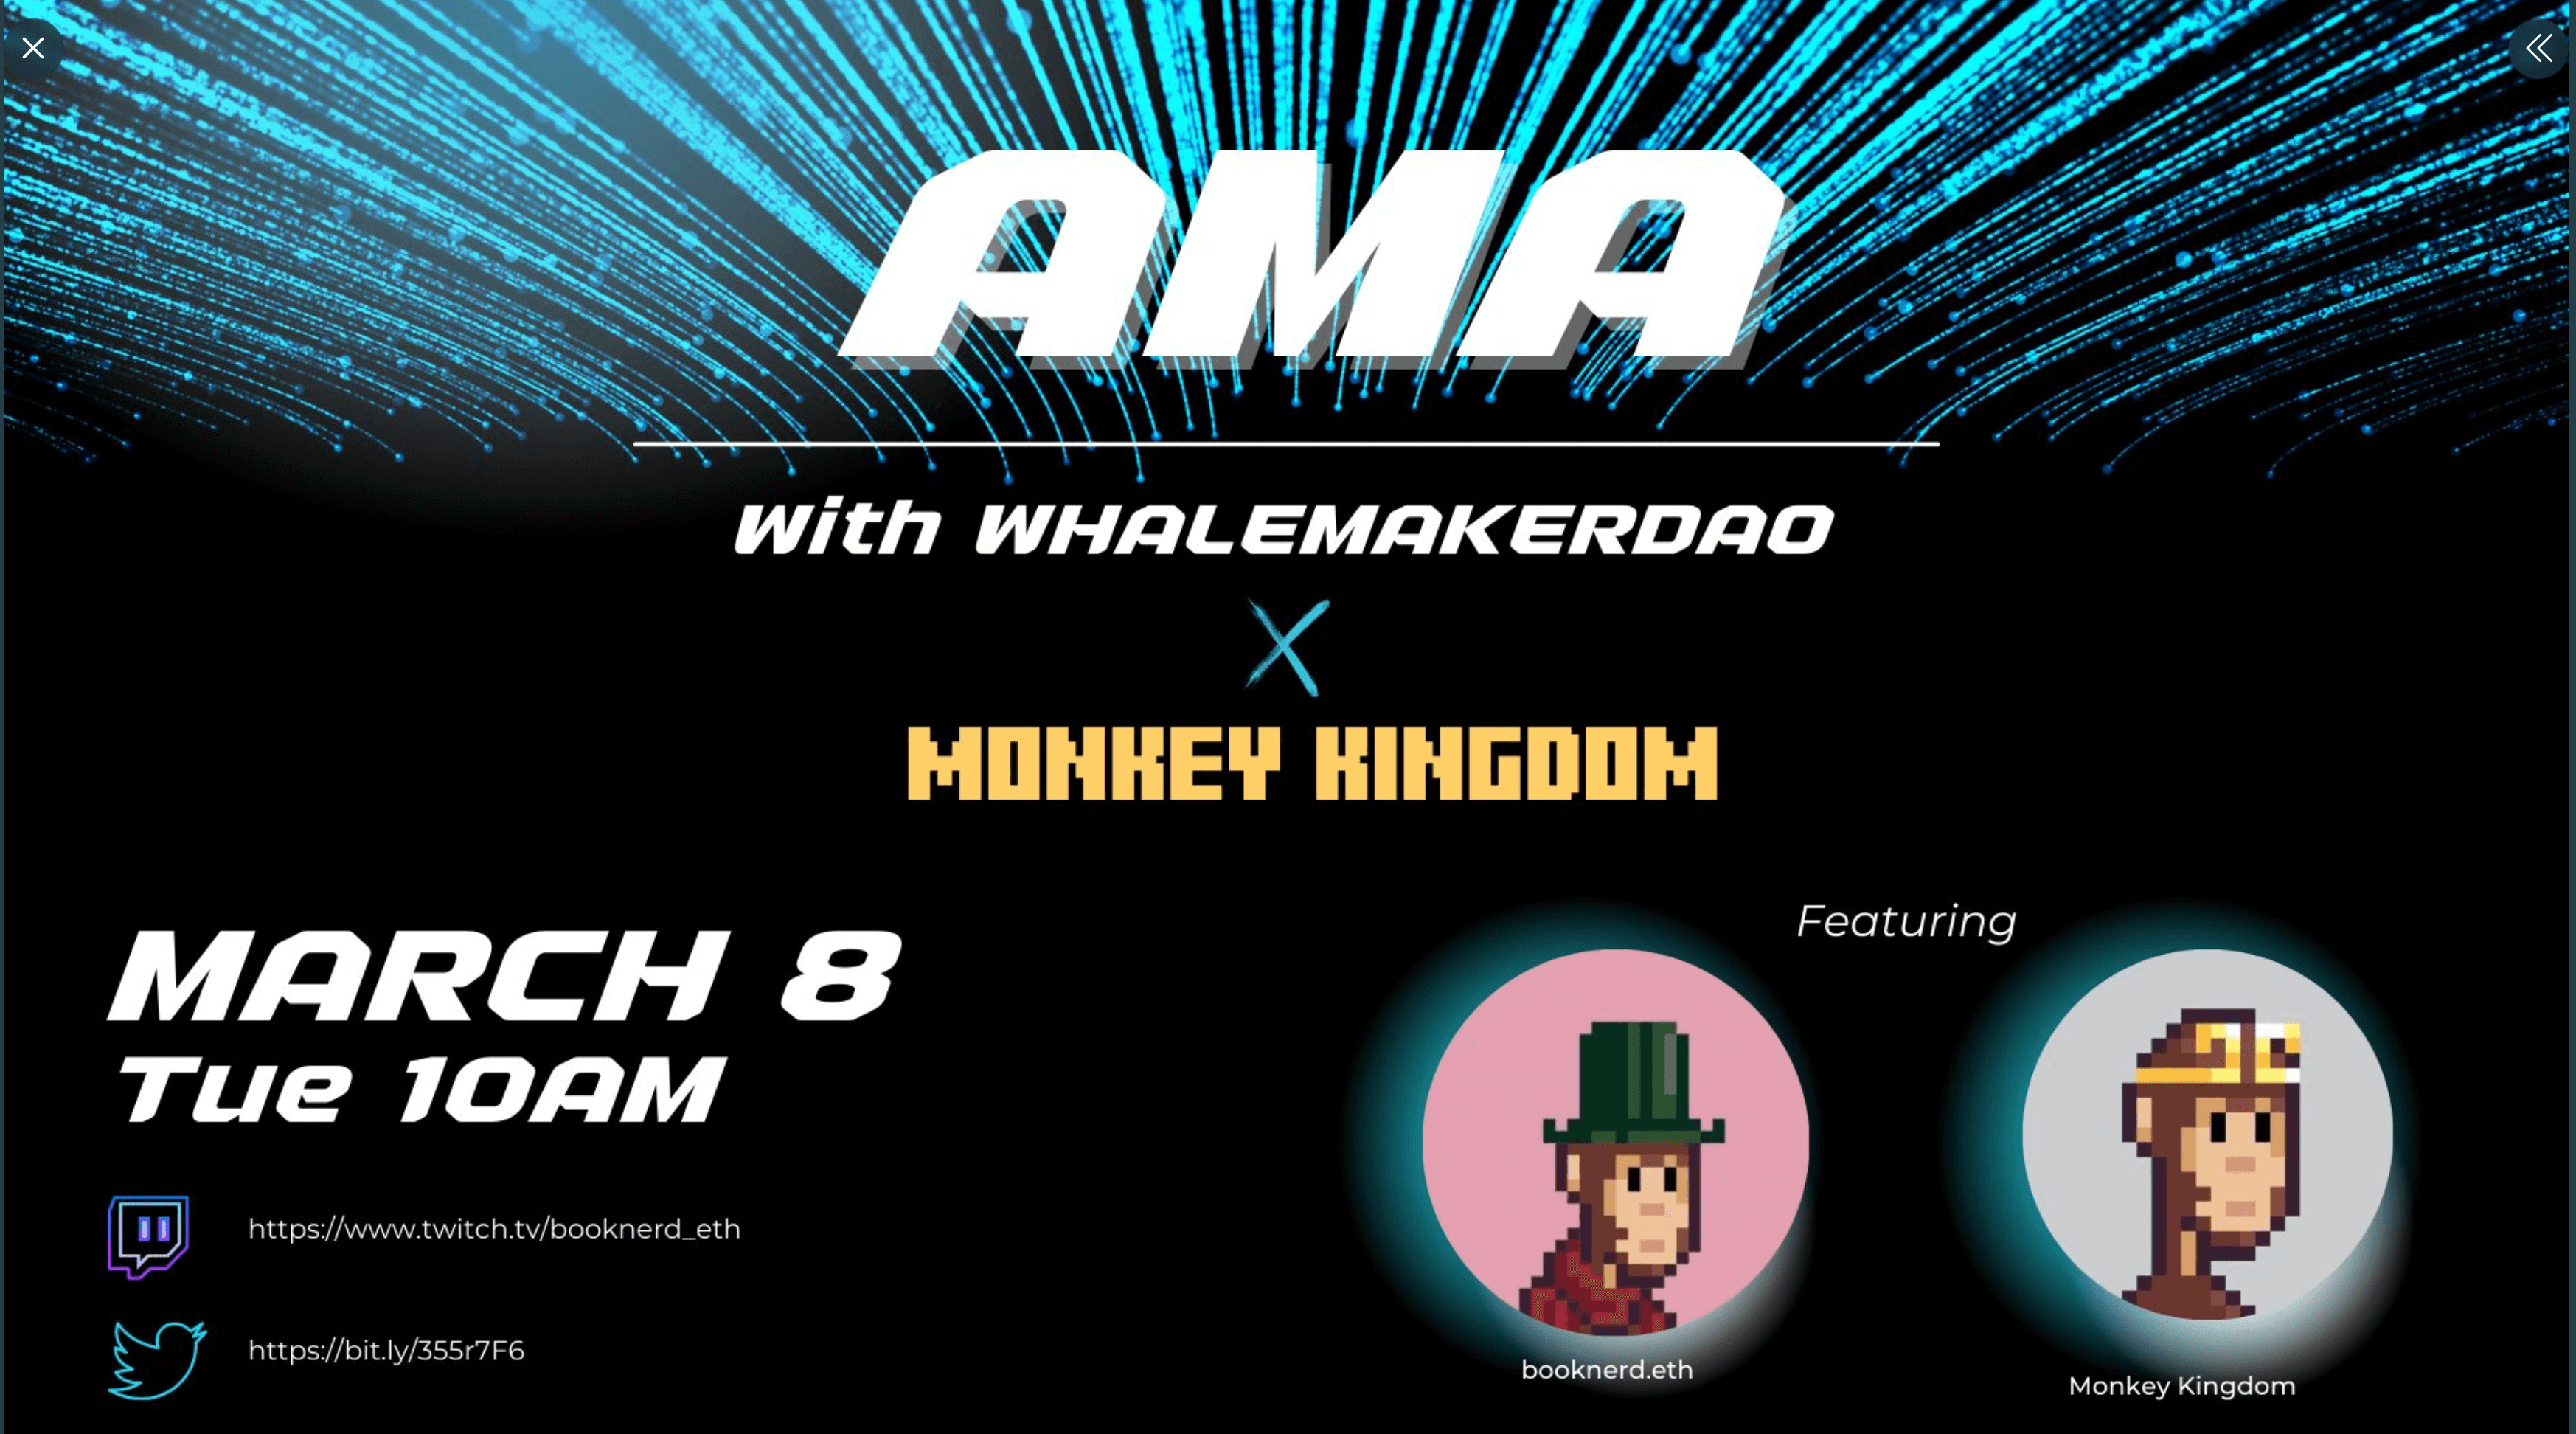 image of AMA promo with WhalemakerDAO and Monkey Kingdom